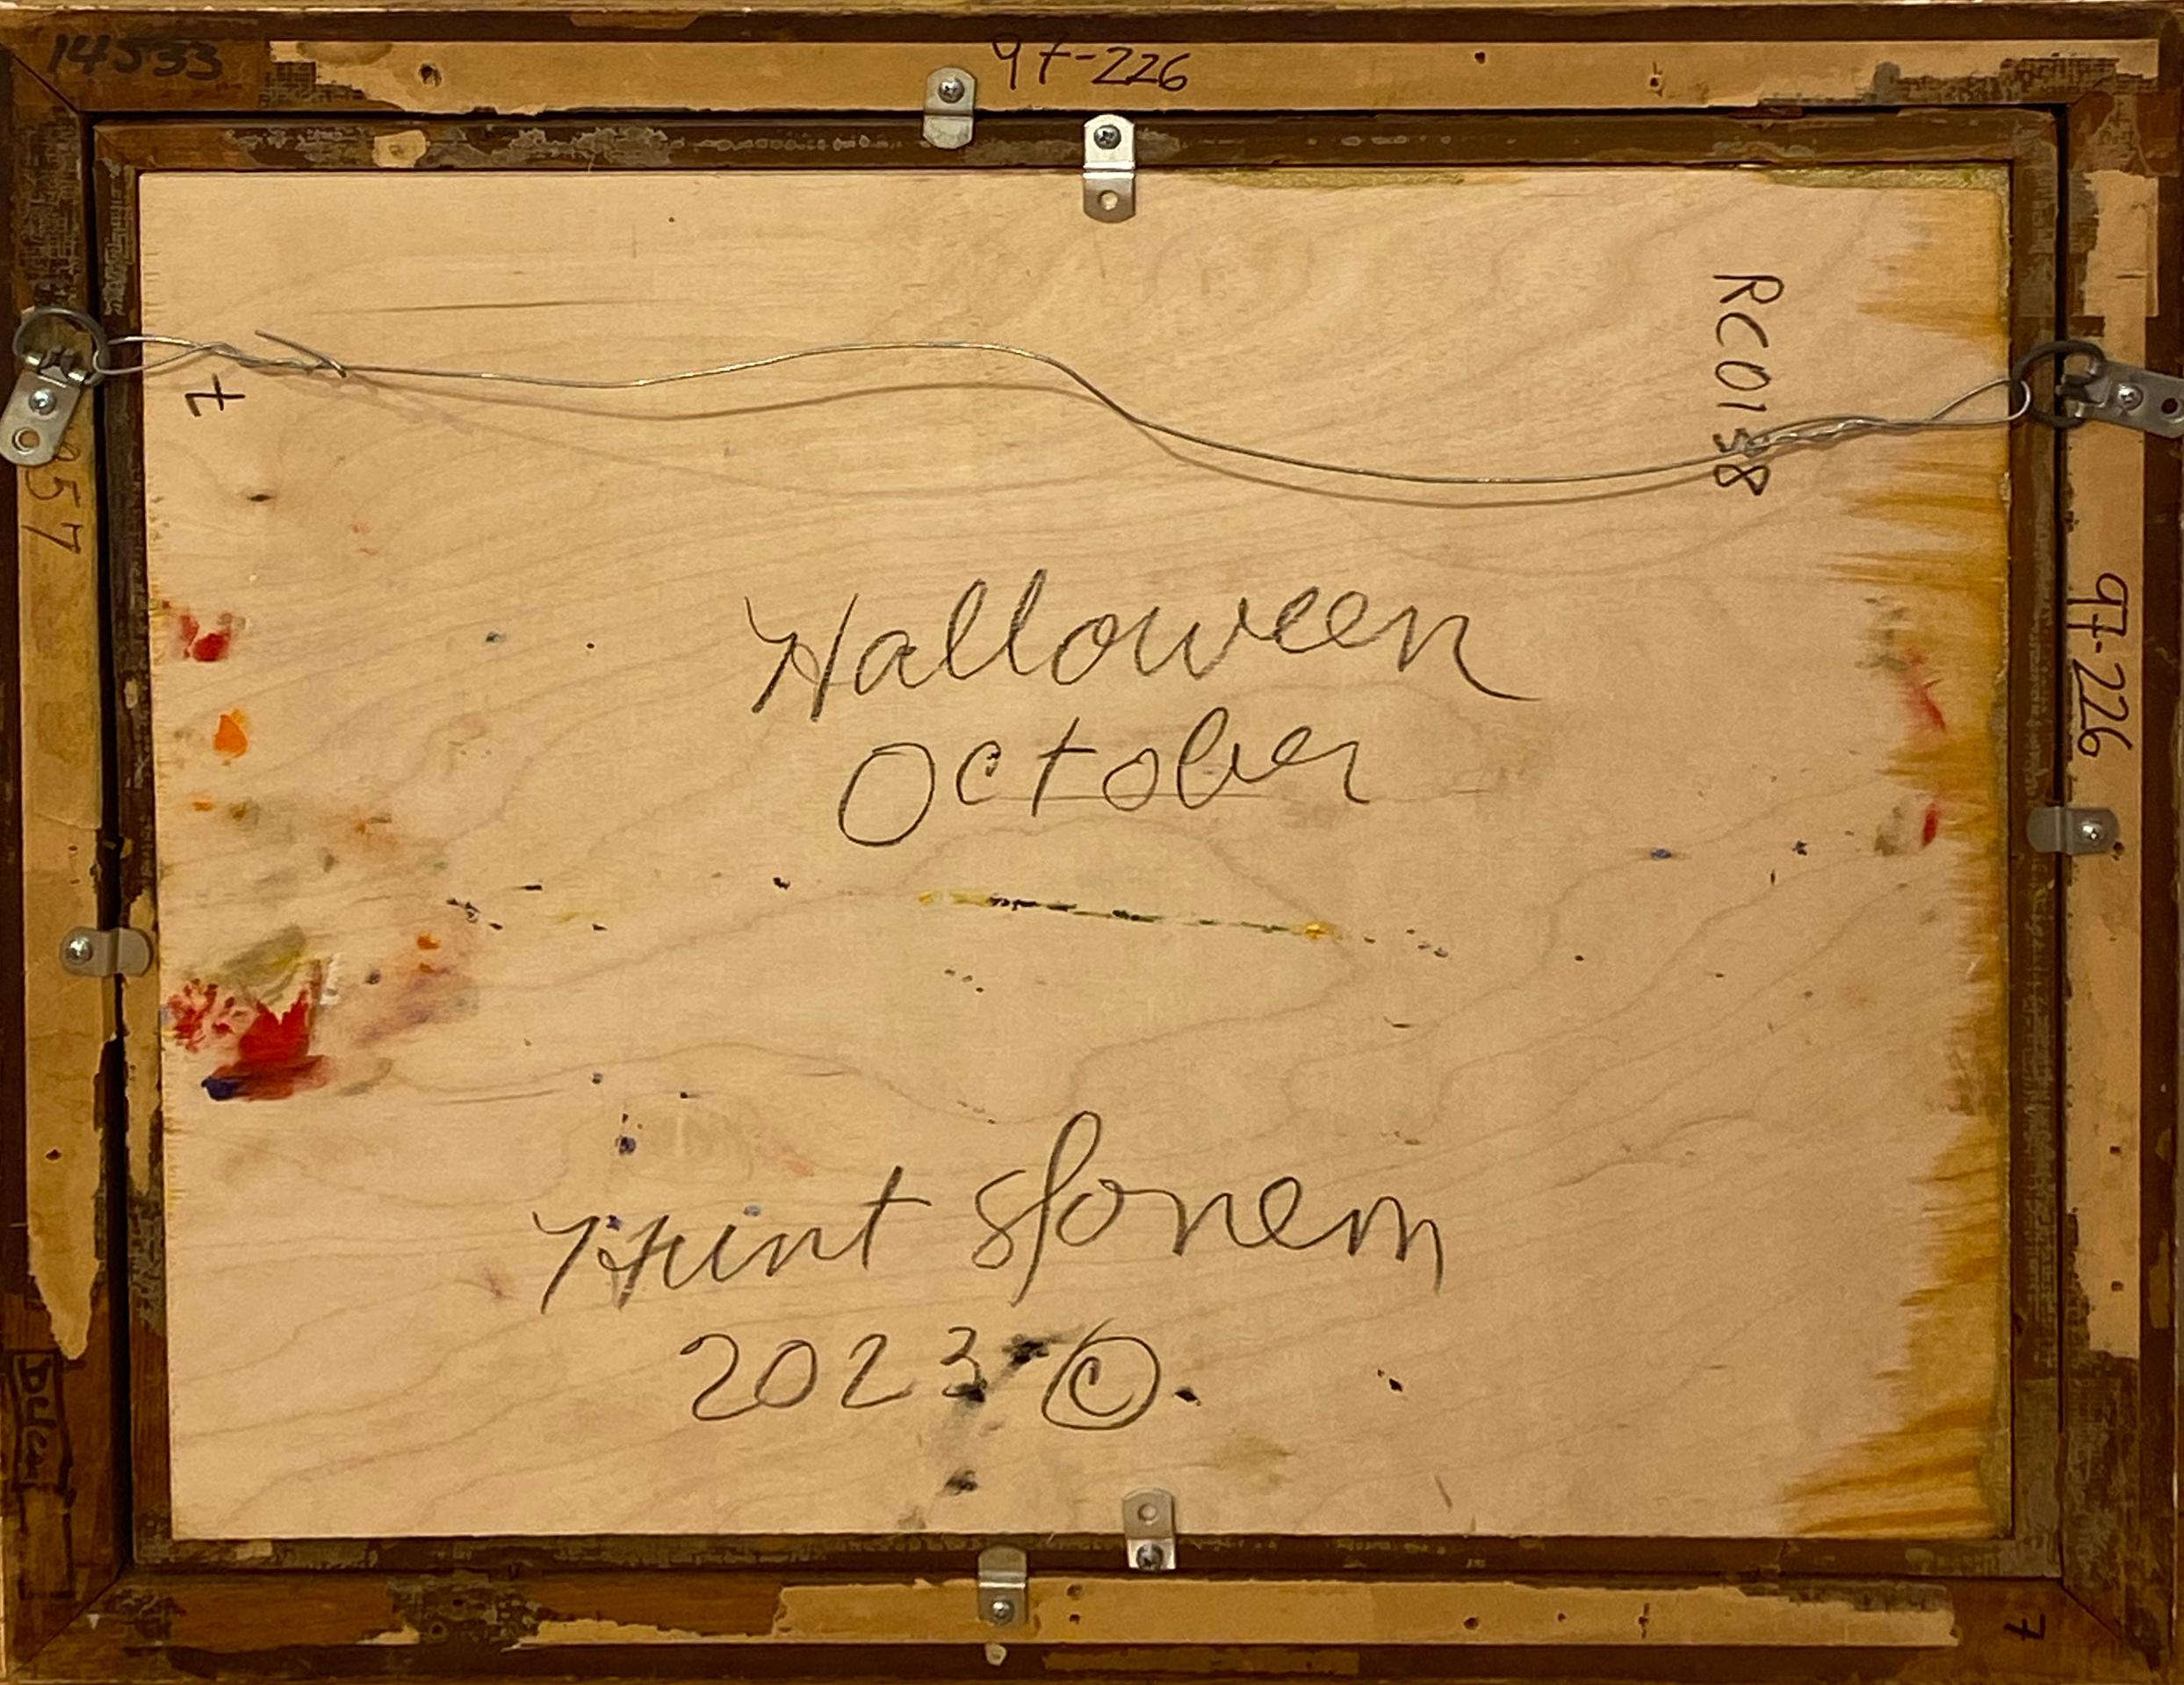 Artist:  Slonem, Hunt
Title:  Halloween October
Date:  2023
Medium:  Oil on Wood
Unframed Dimensions:  15